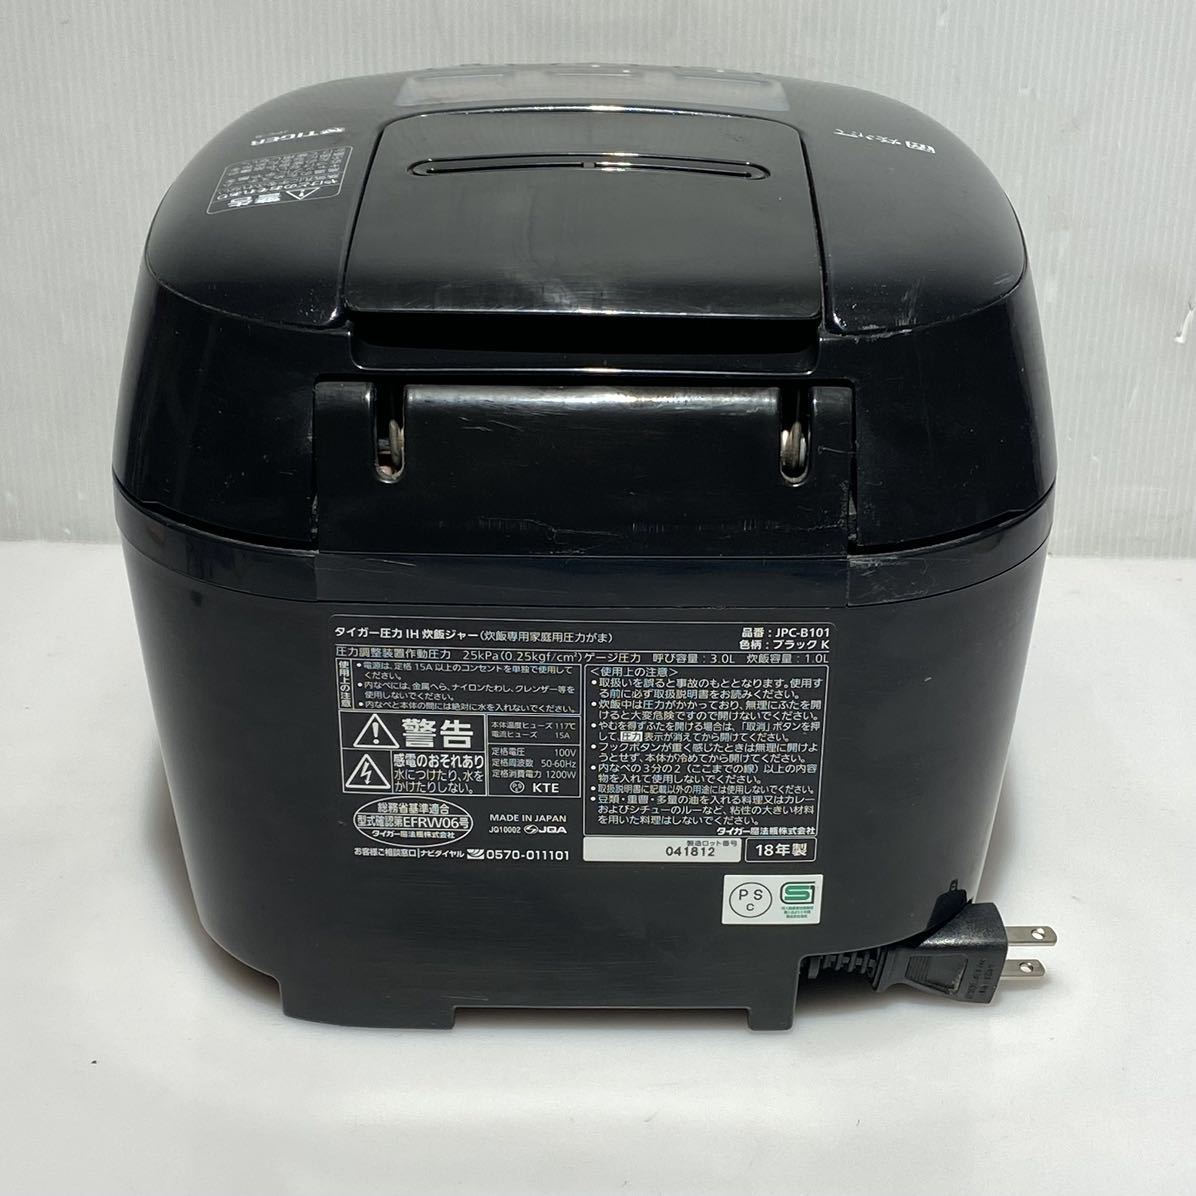 TIGER Tiger JPC-B101 black K pressure IH.. jar rice cooker 18 year made 